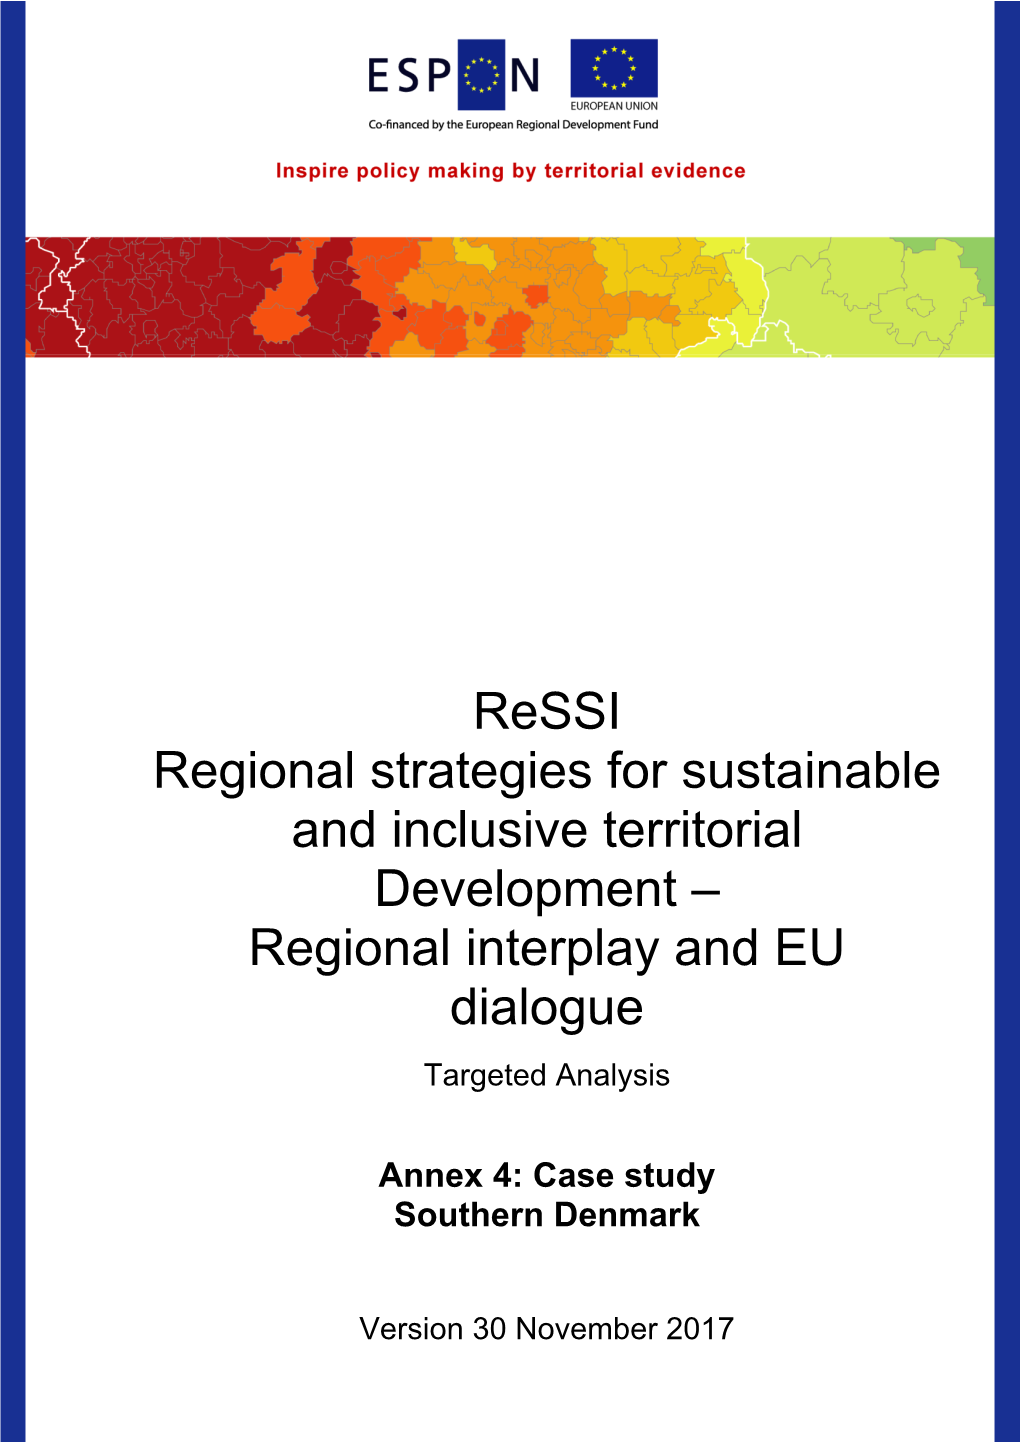 ESPON Ressi Final Report Annex 4 Case Study Region of Southern